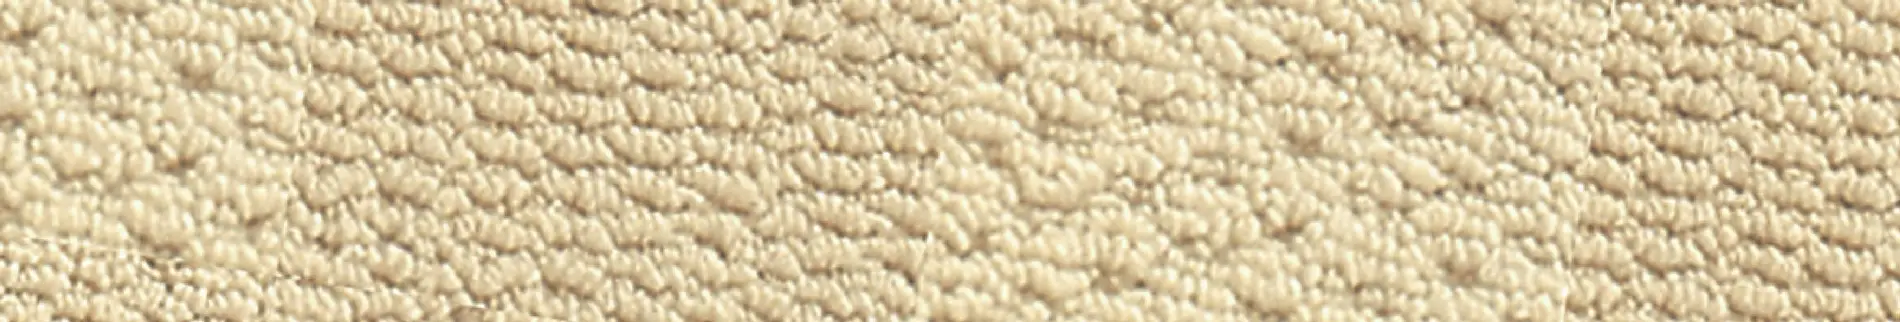 carpet close up 